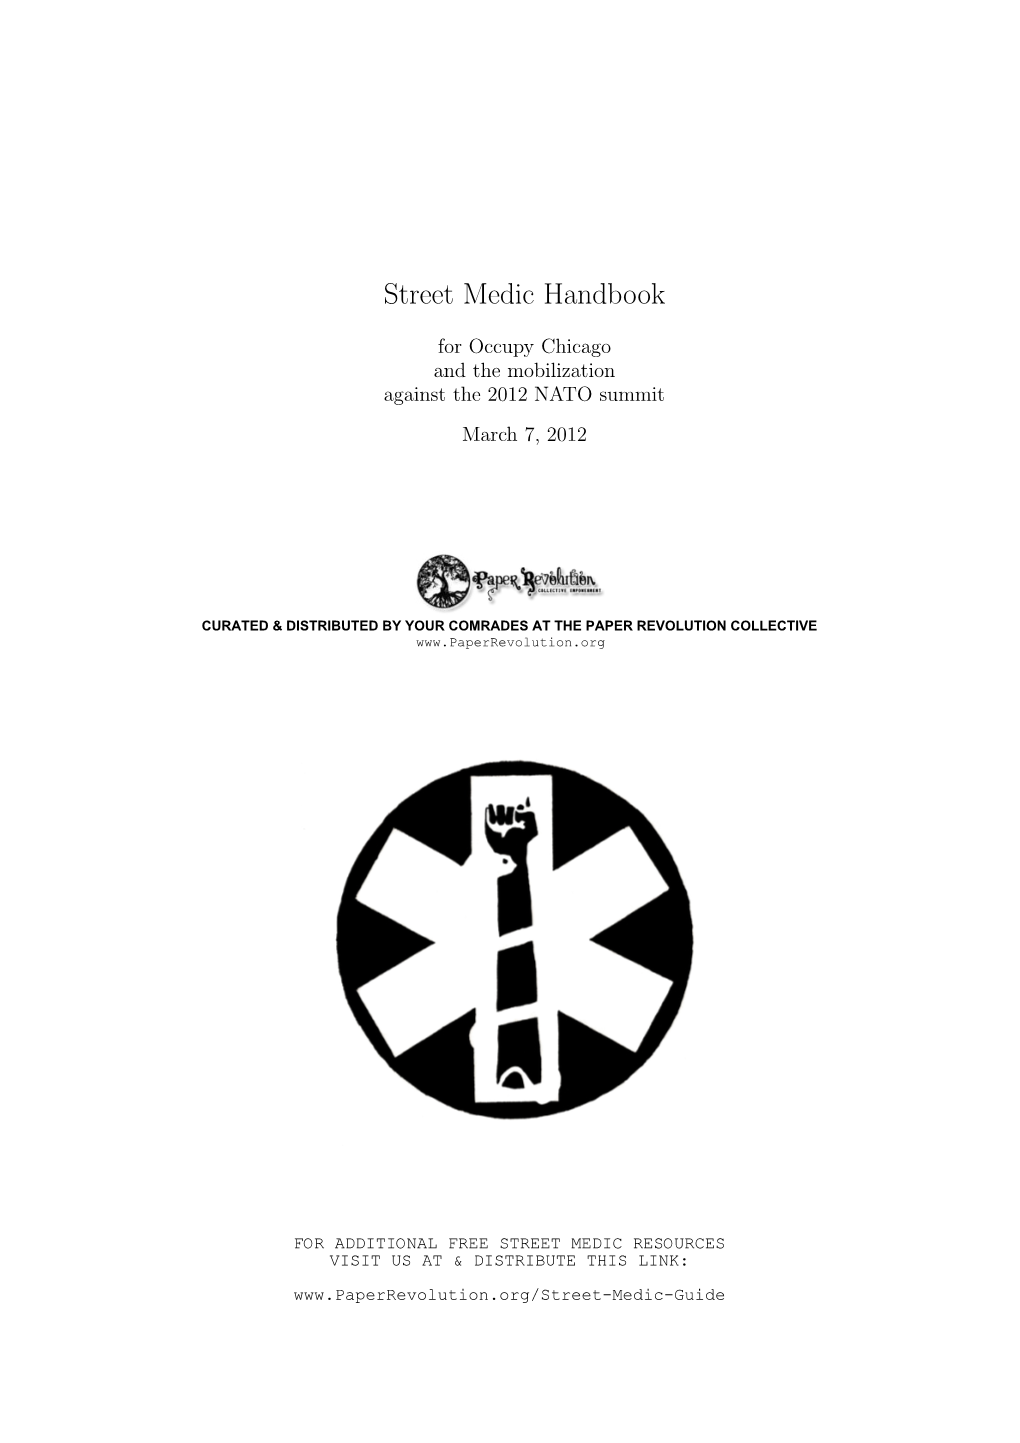 Street Medic Handbook for Occupy Chicago